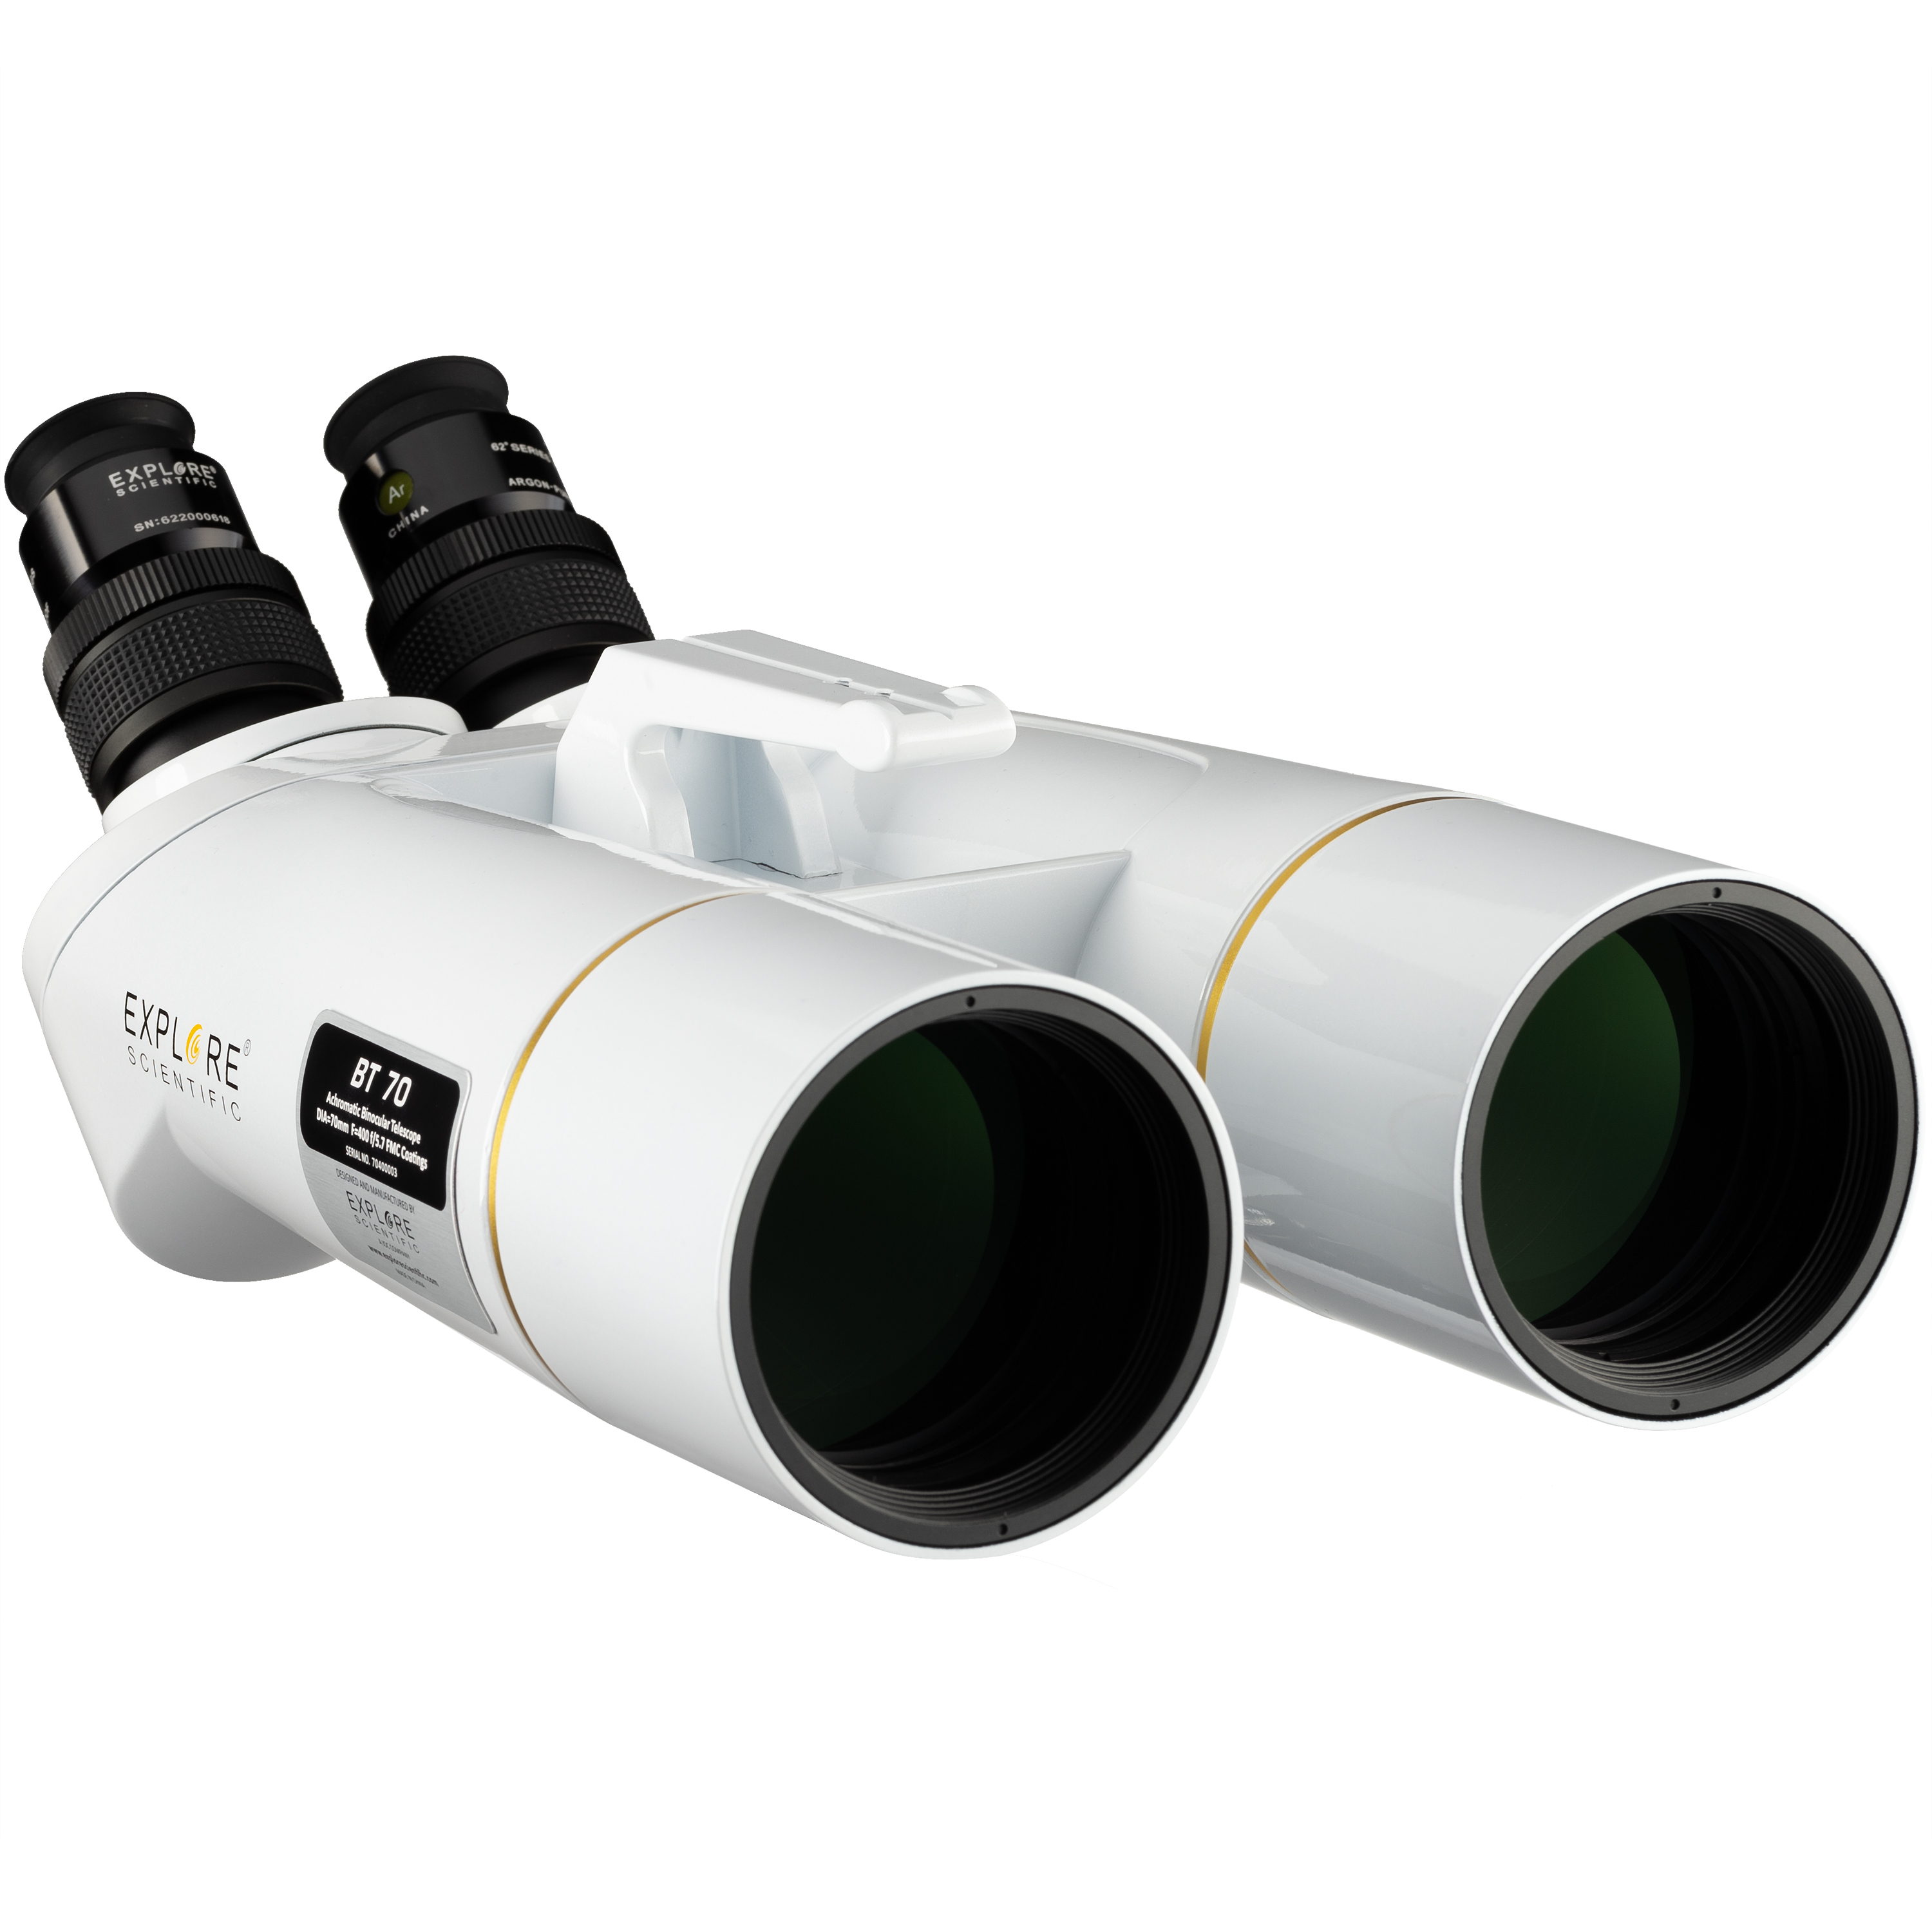 EXPLORE SCIENTIFIC BT-70 SF Giant Binoculars with 62° LER Eyepieces 20mm